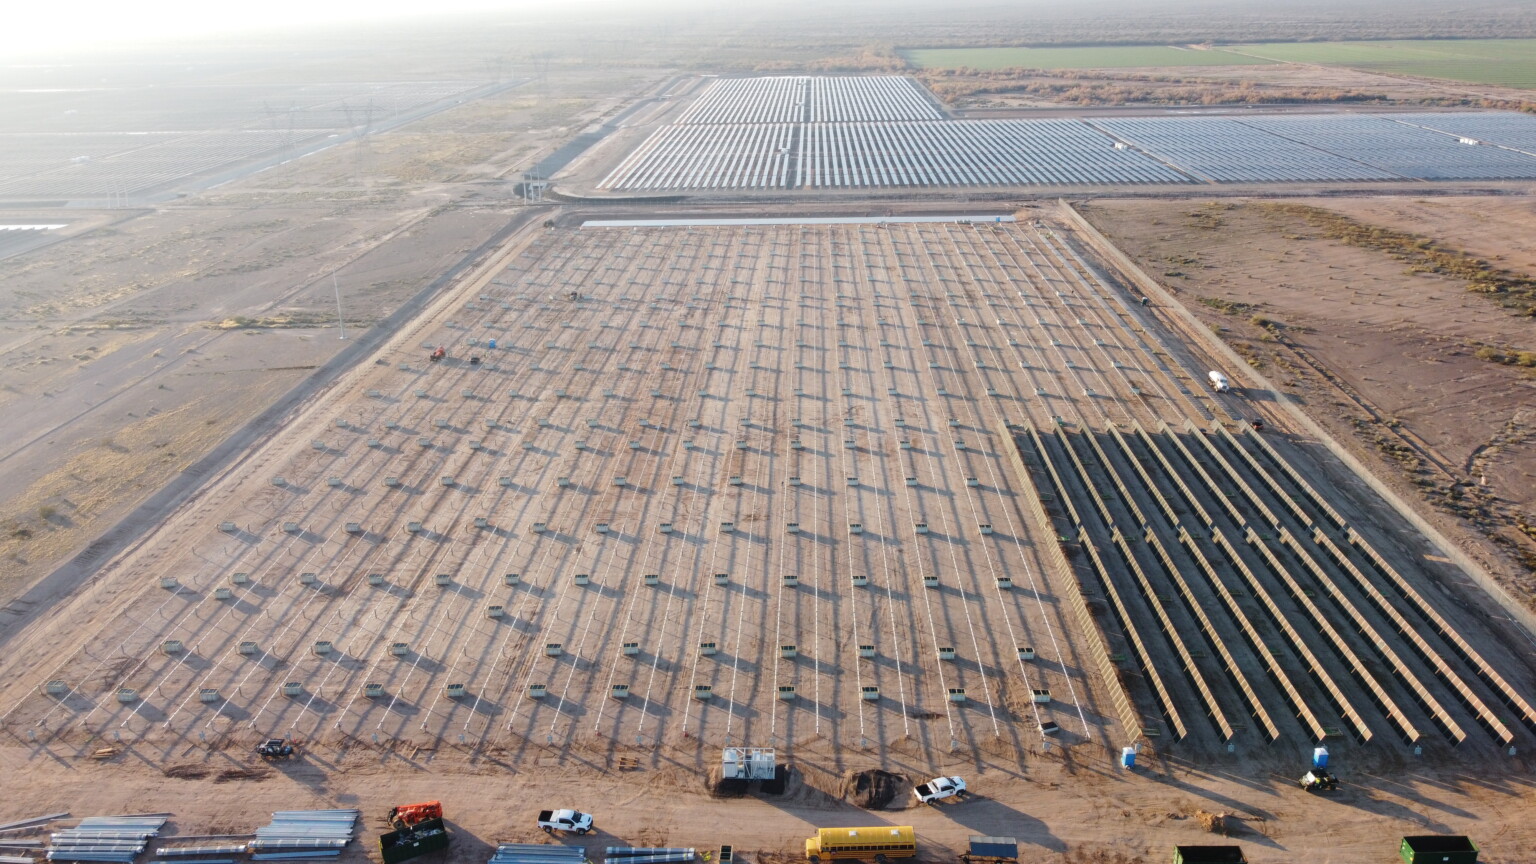 solar panels, ground mount solar, utility scale solar, solar farm, solar plant, renewable energy